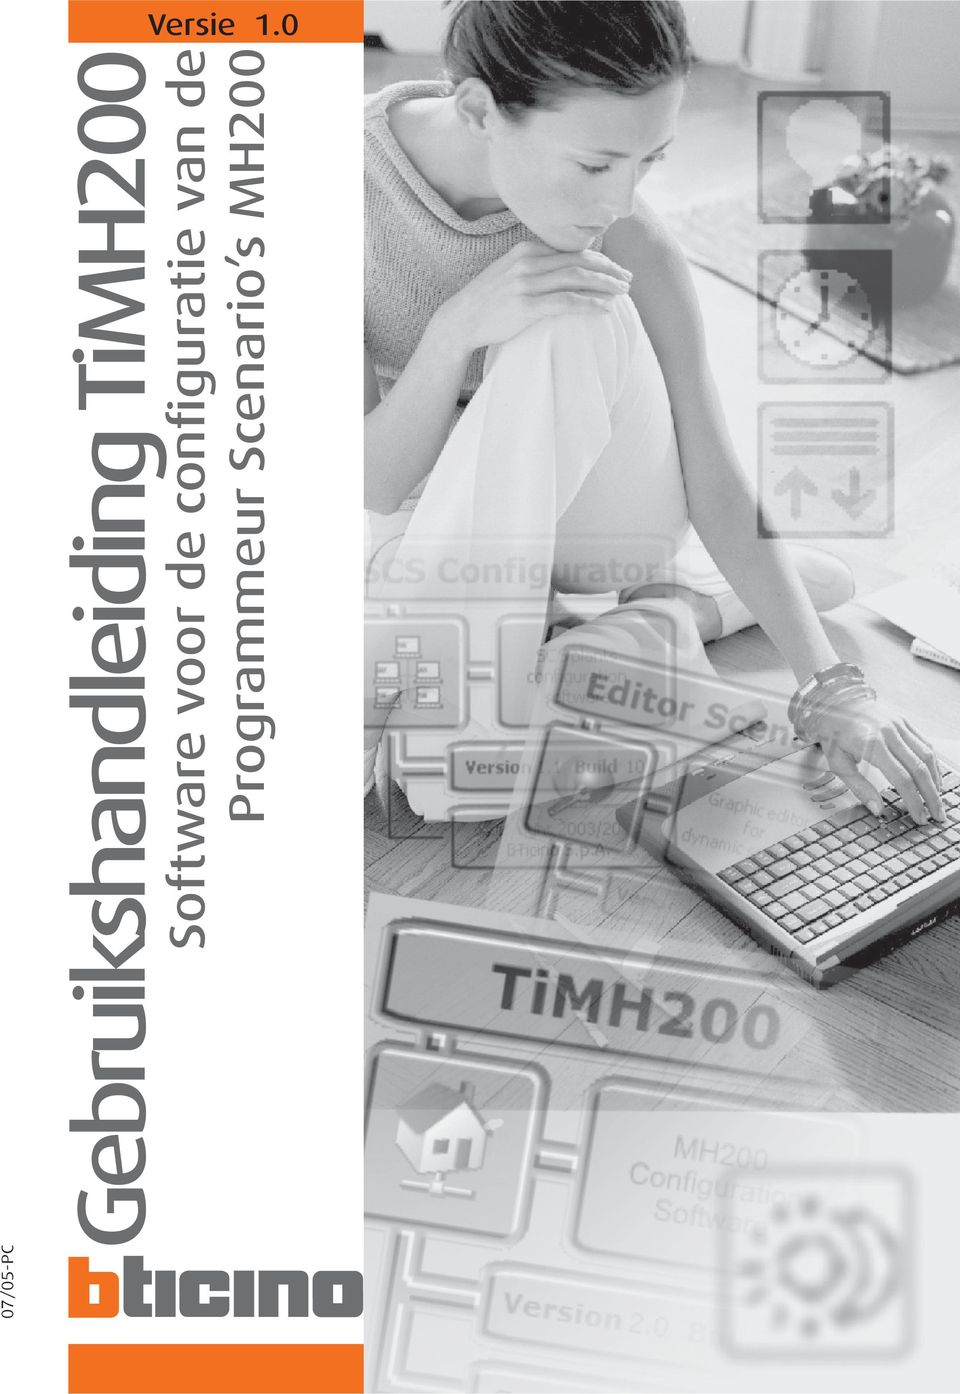 Gebruikshandleiding TiMH200